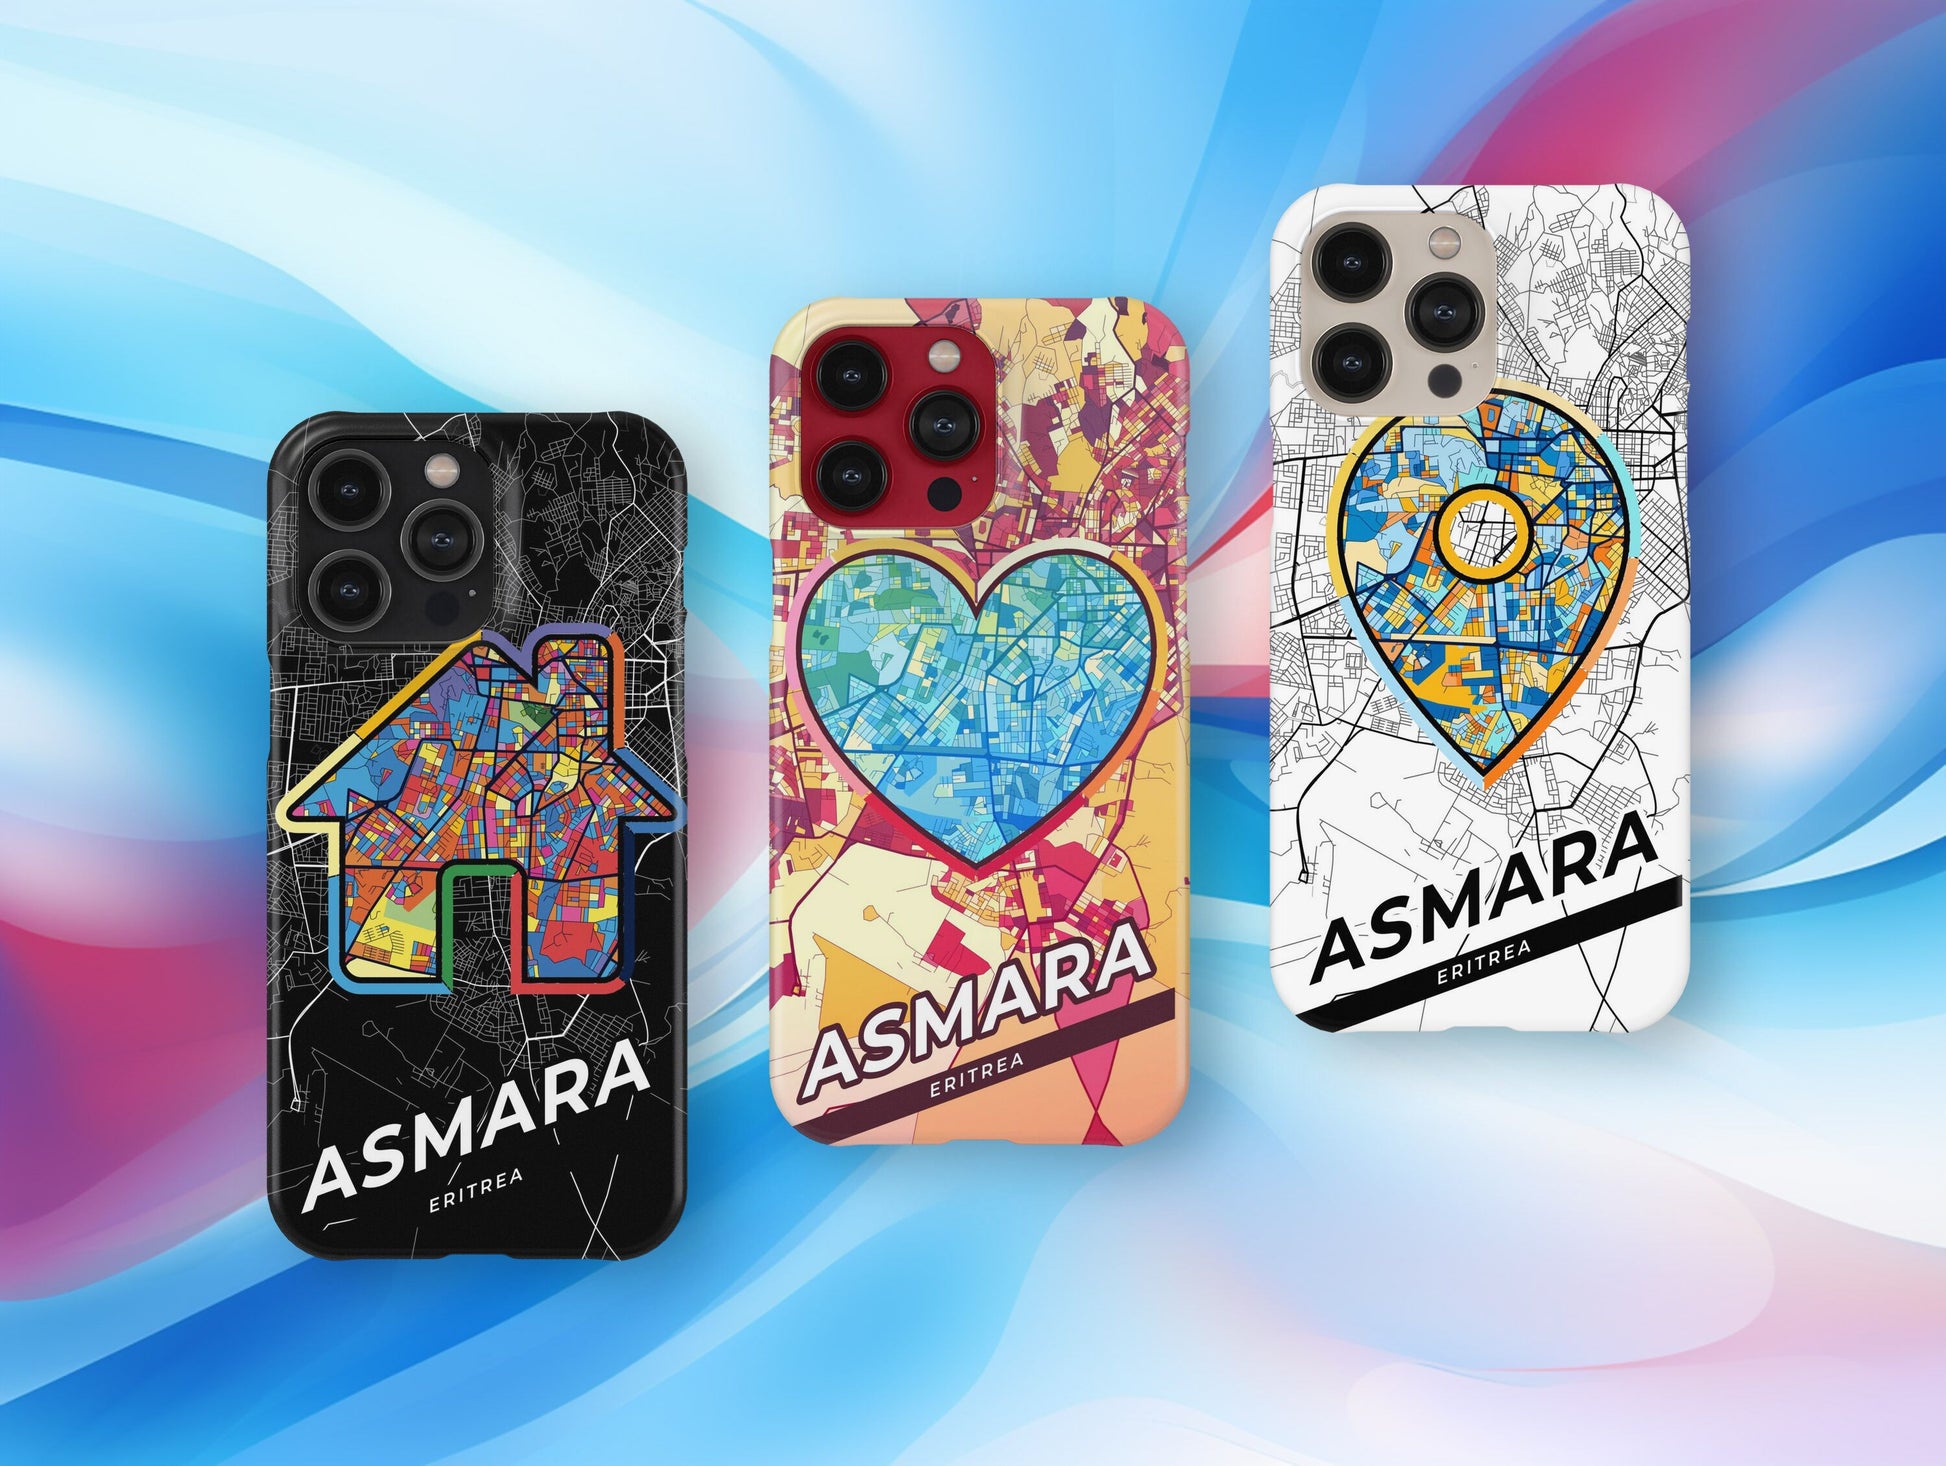 Asmara Eritrea slim phone case with colorful icon. Birthday, wedding or housewarming gift. Couple match cases.